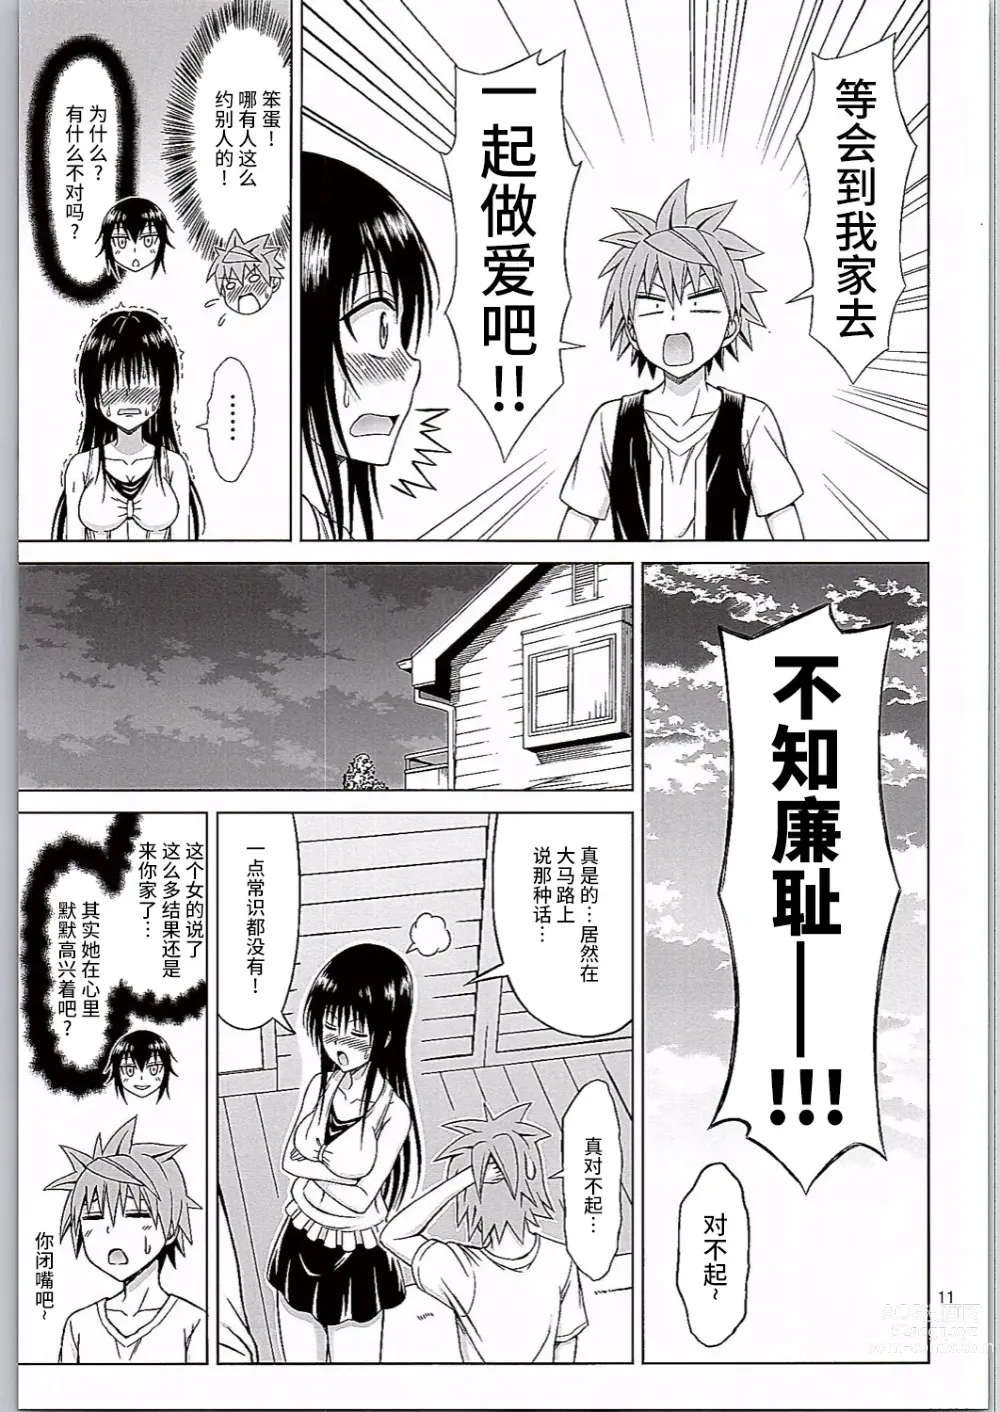 Page 11 of doujinshi Kotegawa Ijiri